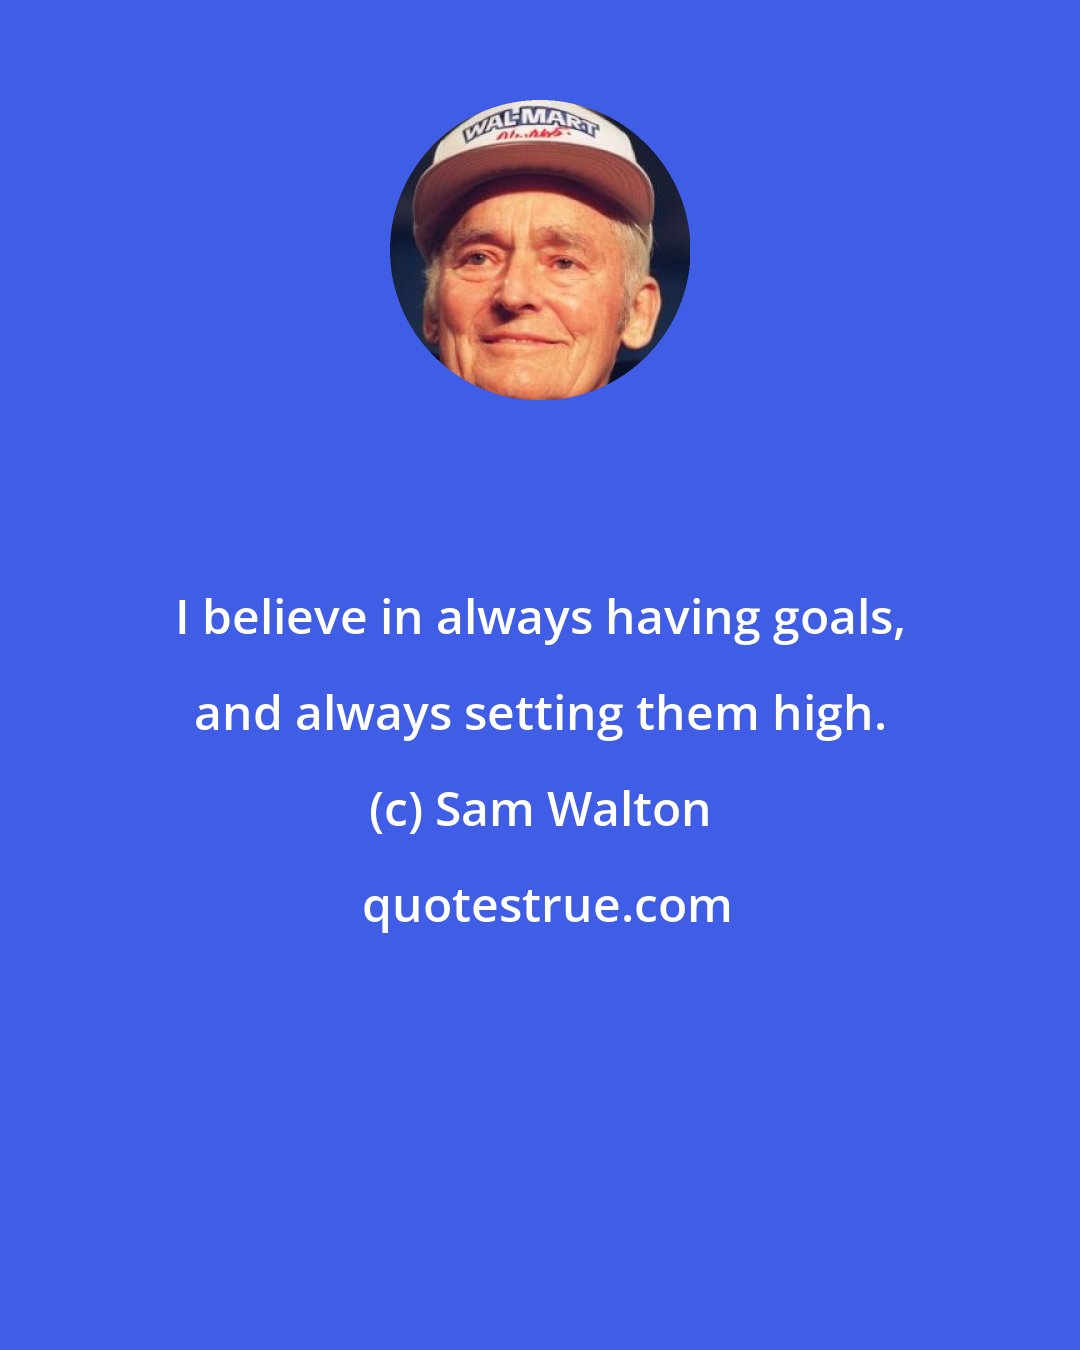 Sam Walton: I believe in always having goals, and always setting them high.